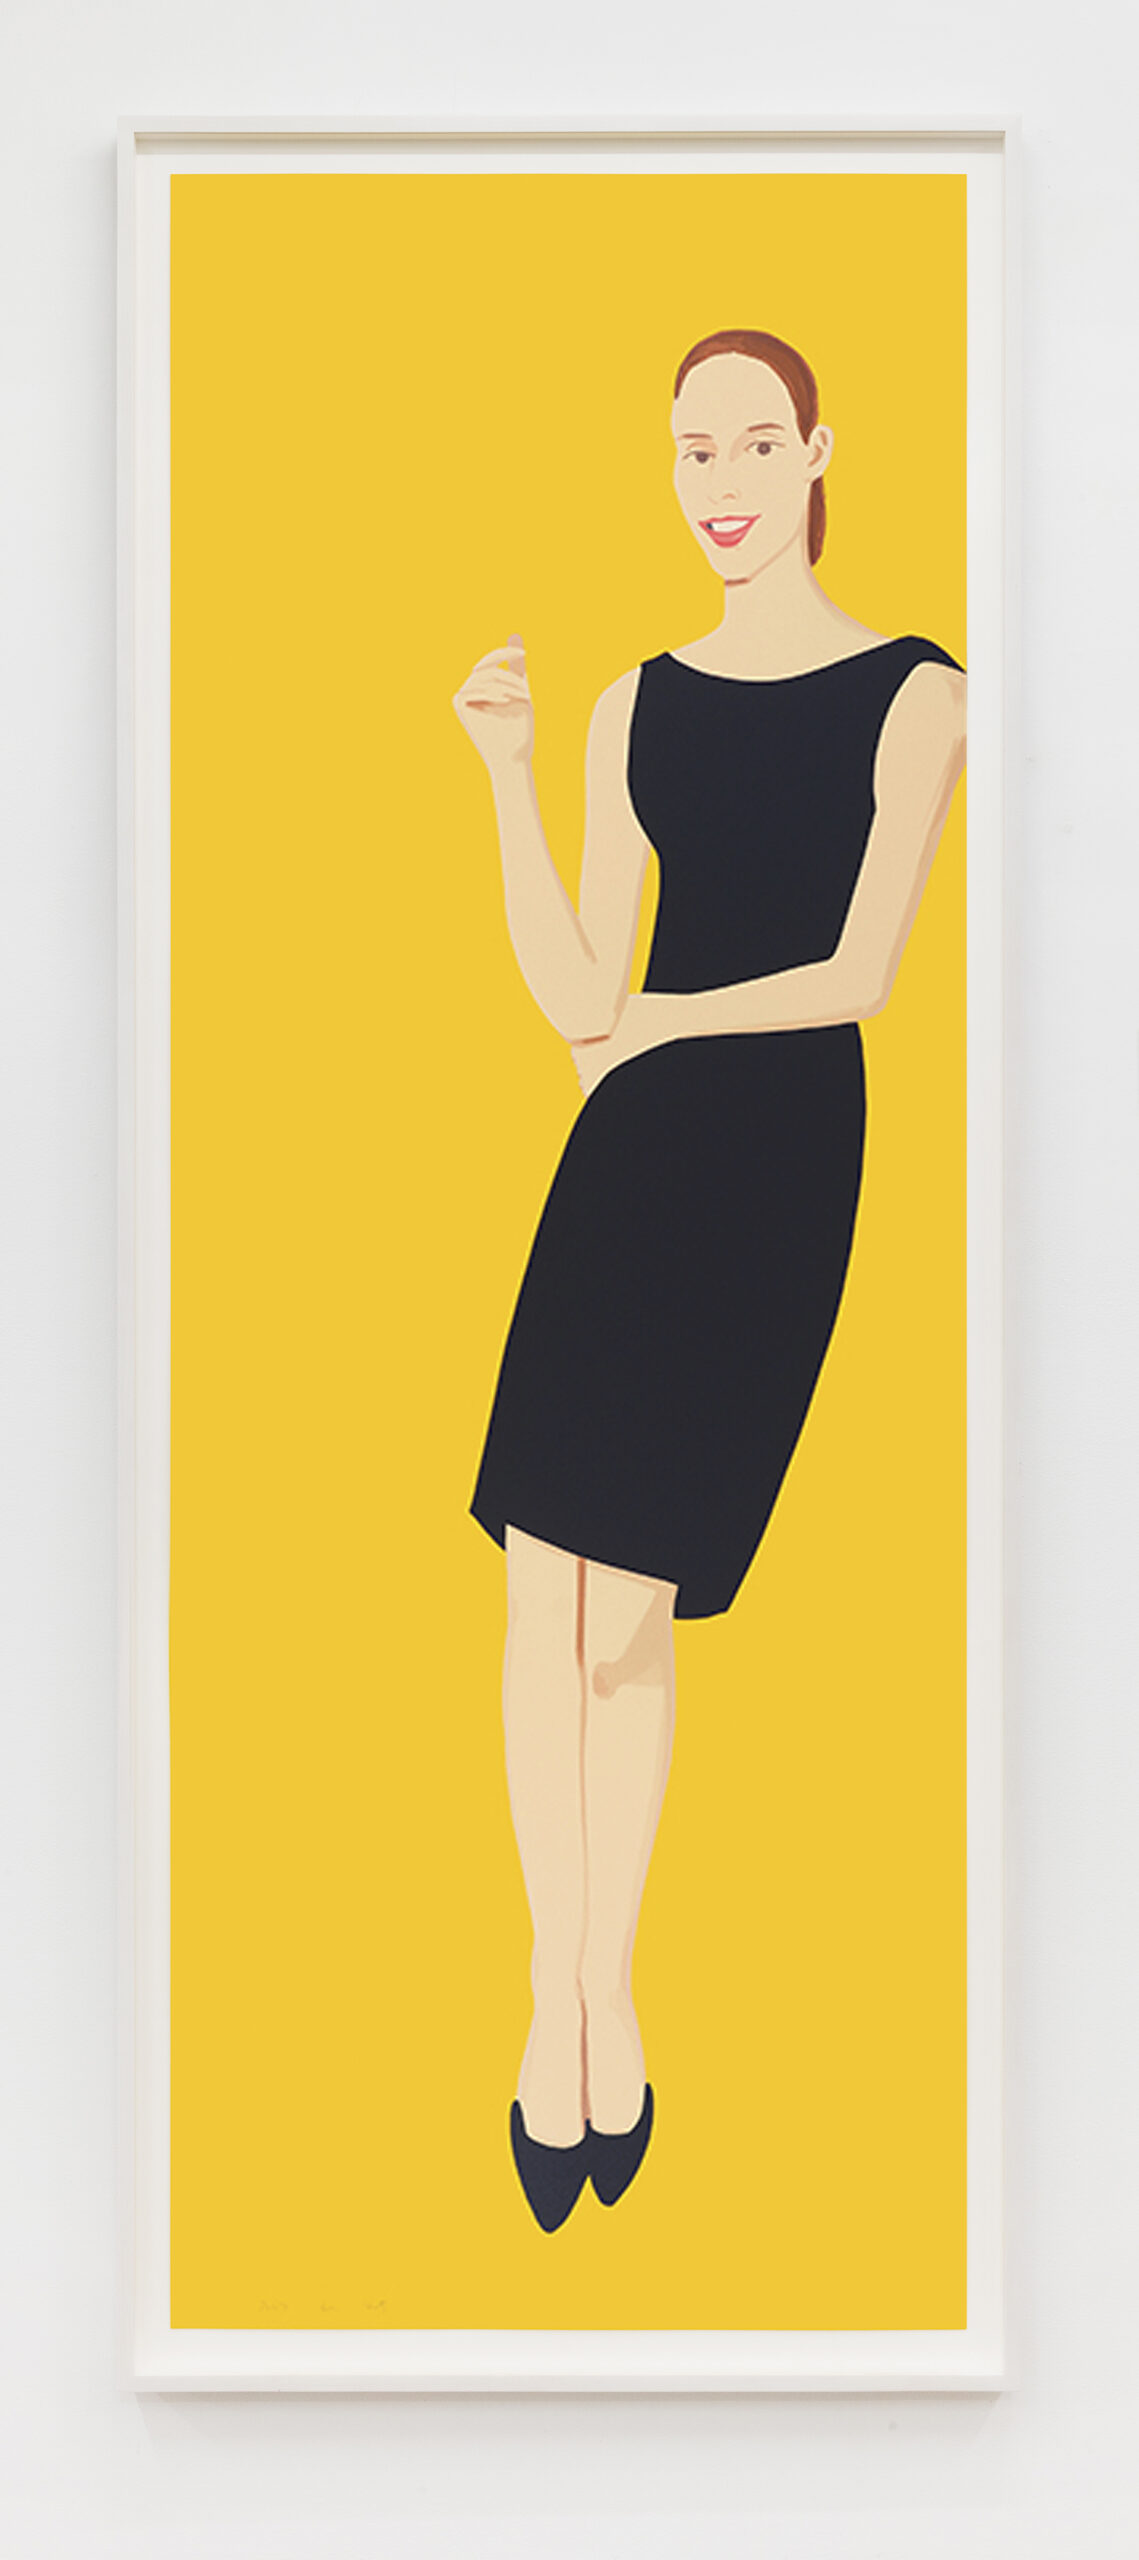 Alex Katz, Black Dress 5 (Ulla), 2015 Silkscreen in 31 colors Paper Dimensions: 80 x 30 inches (203.2 x 76.2 cm) Framed Dimensions: 83 3/4 x 33 3/4 inches (212.7 x 85.7 cm) Edition of 35